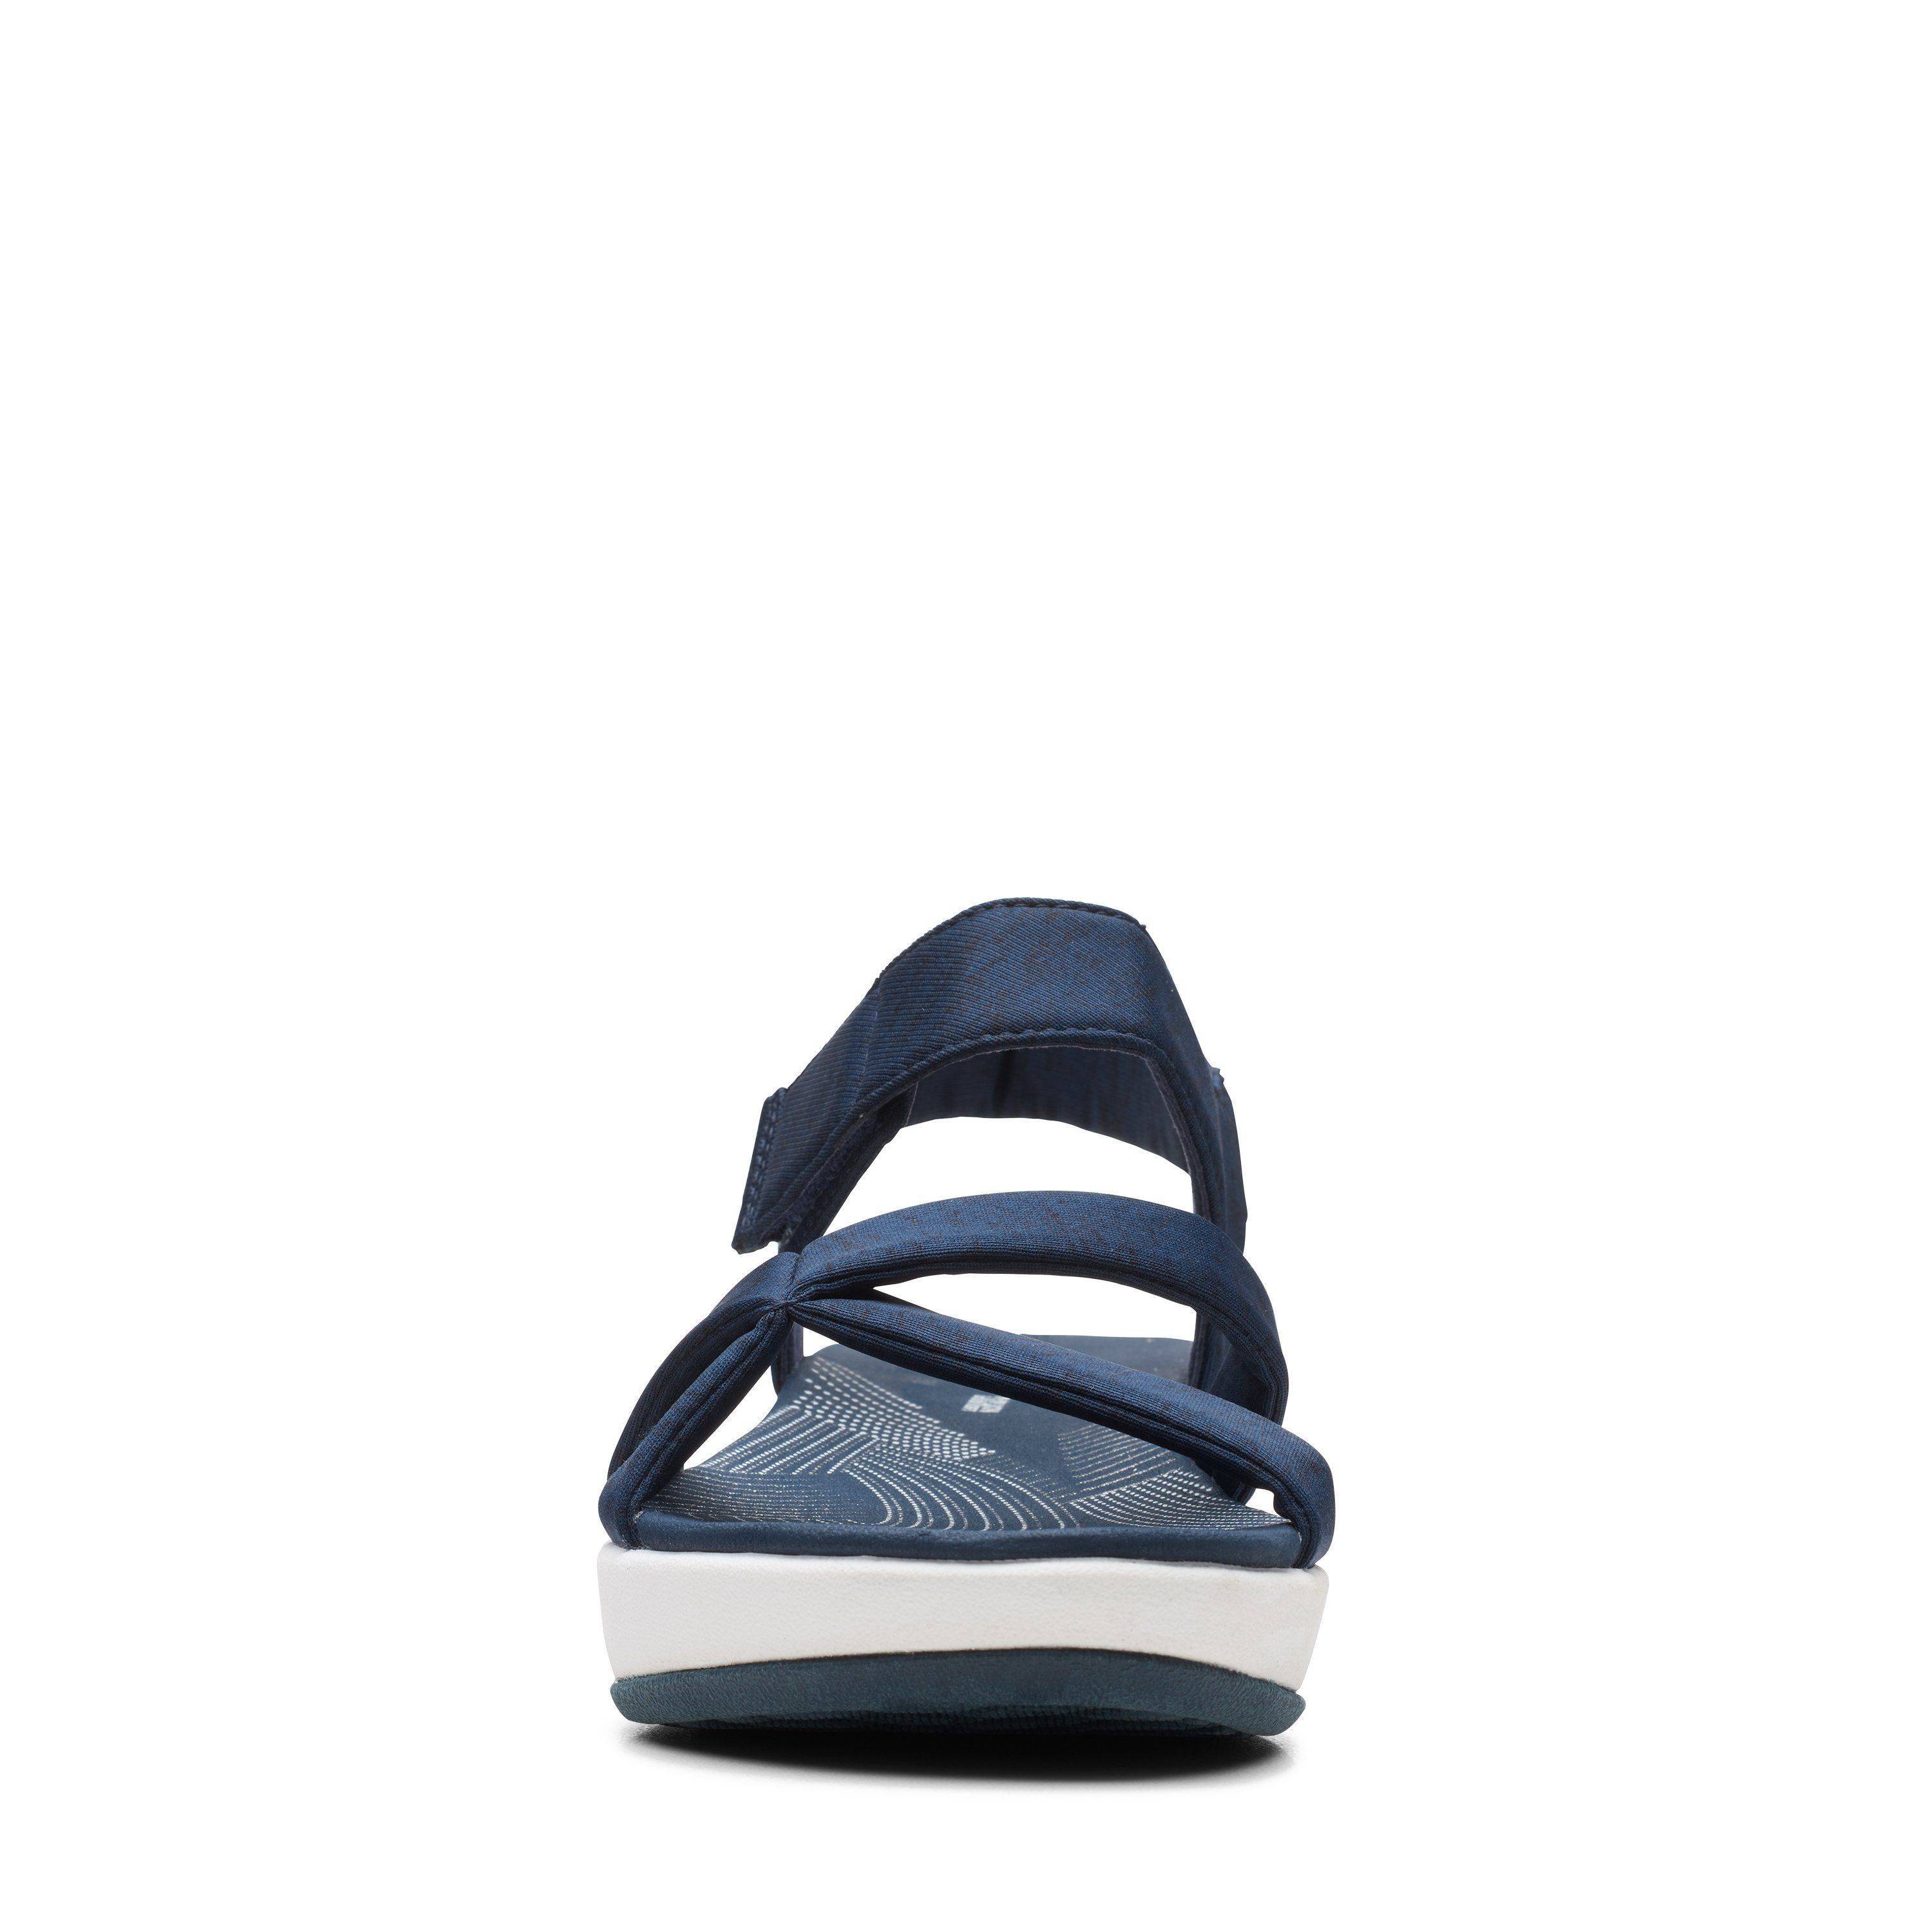 Женские сандалии Clarks, синие, цвет синий, размер 41.5 - фото 3